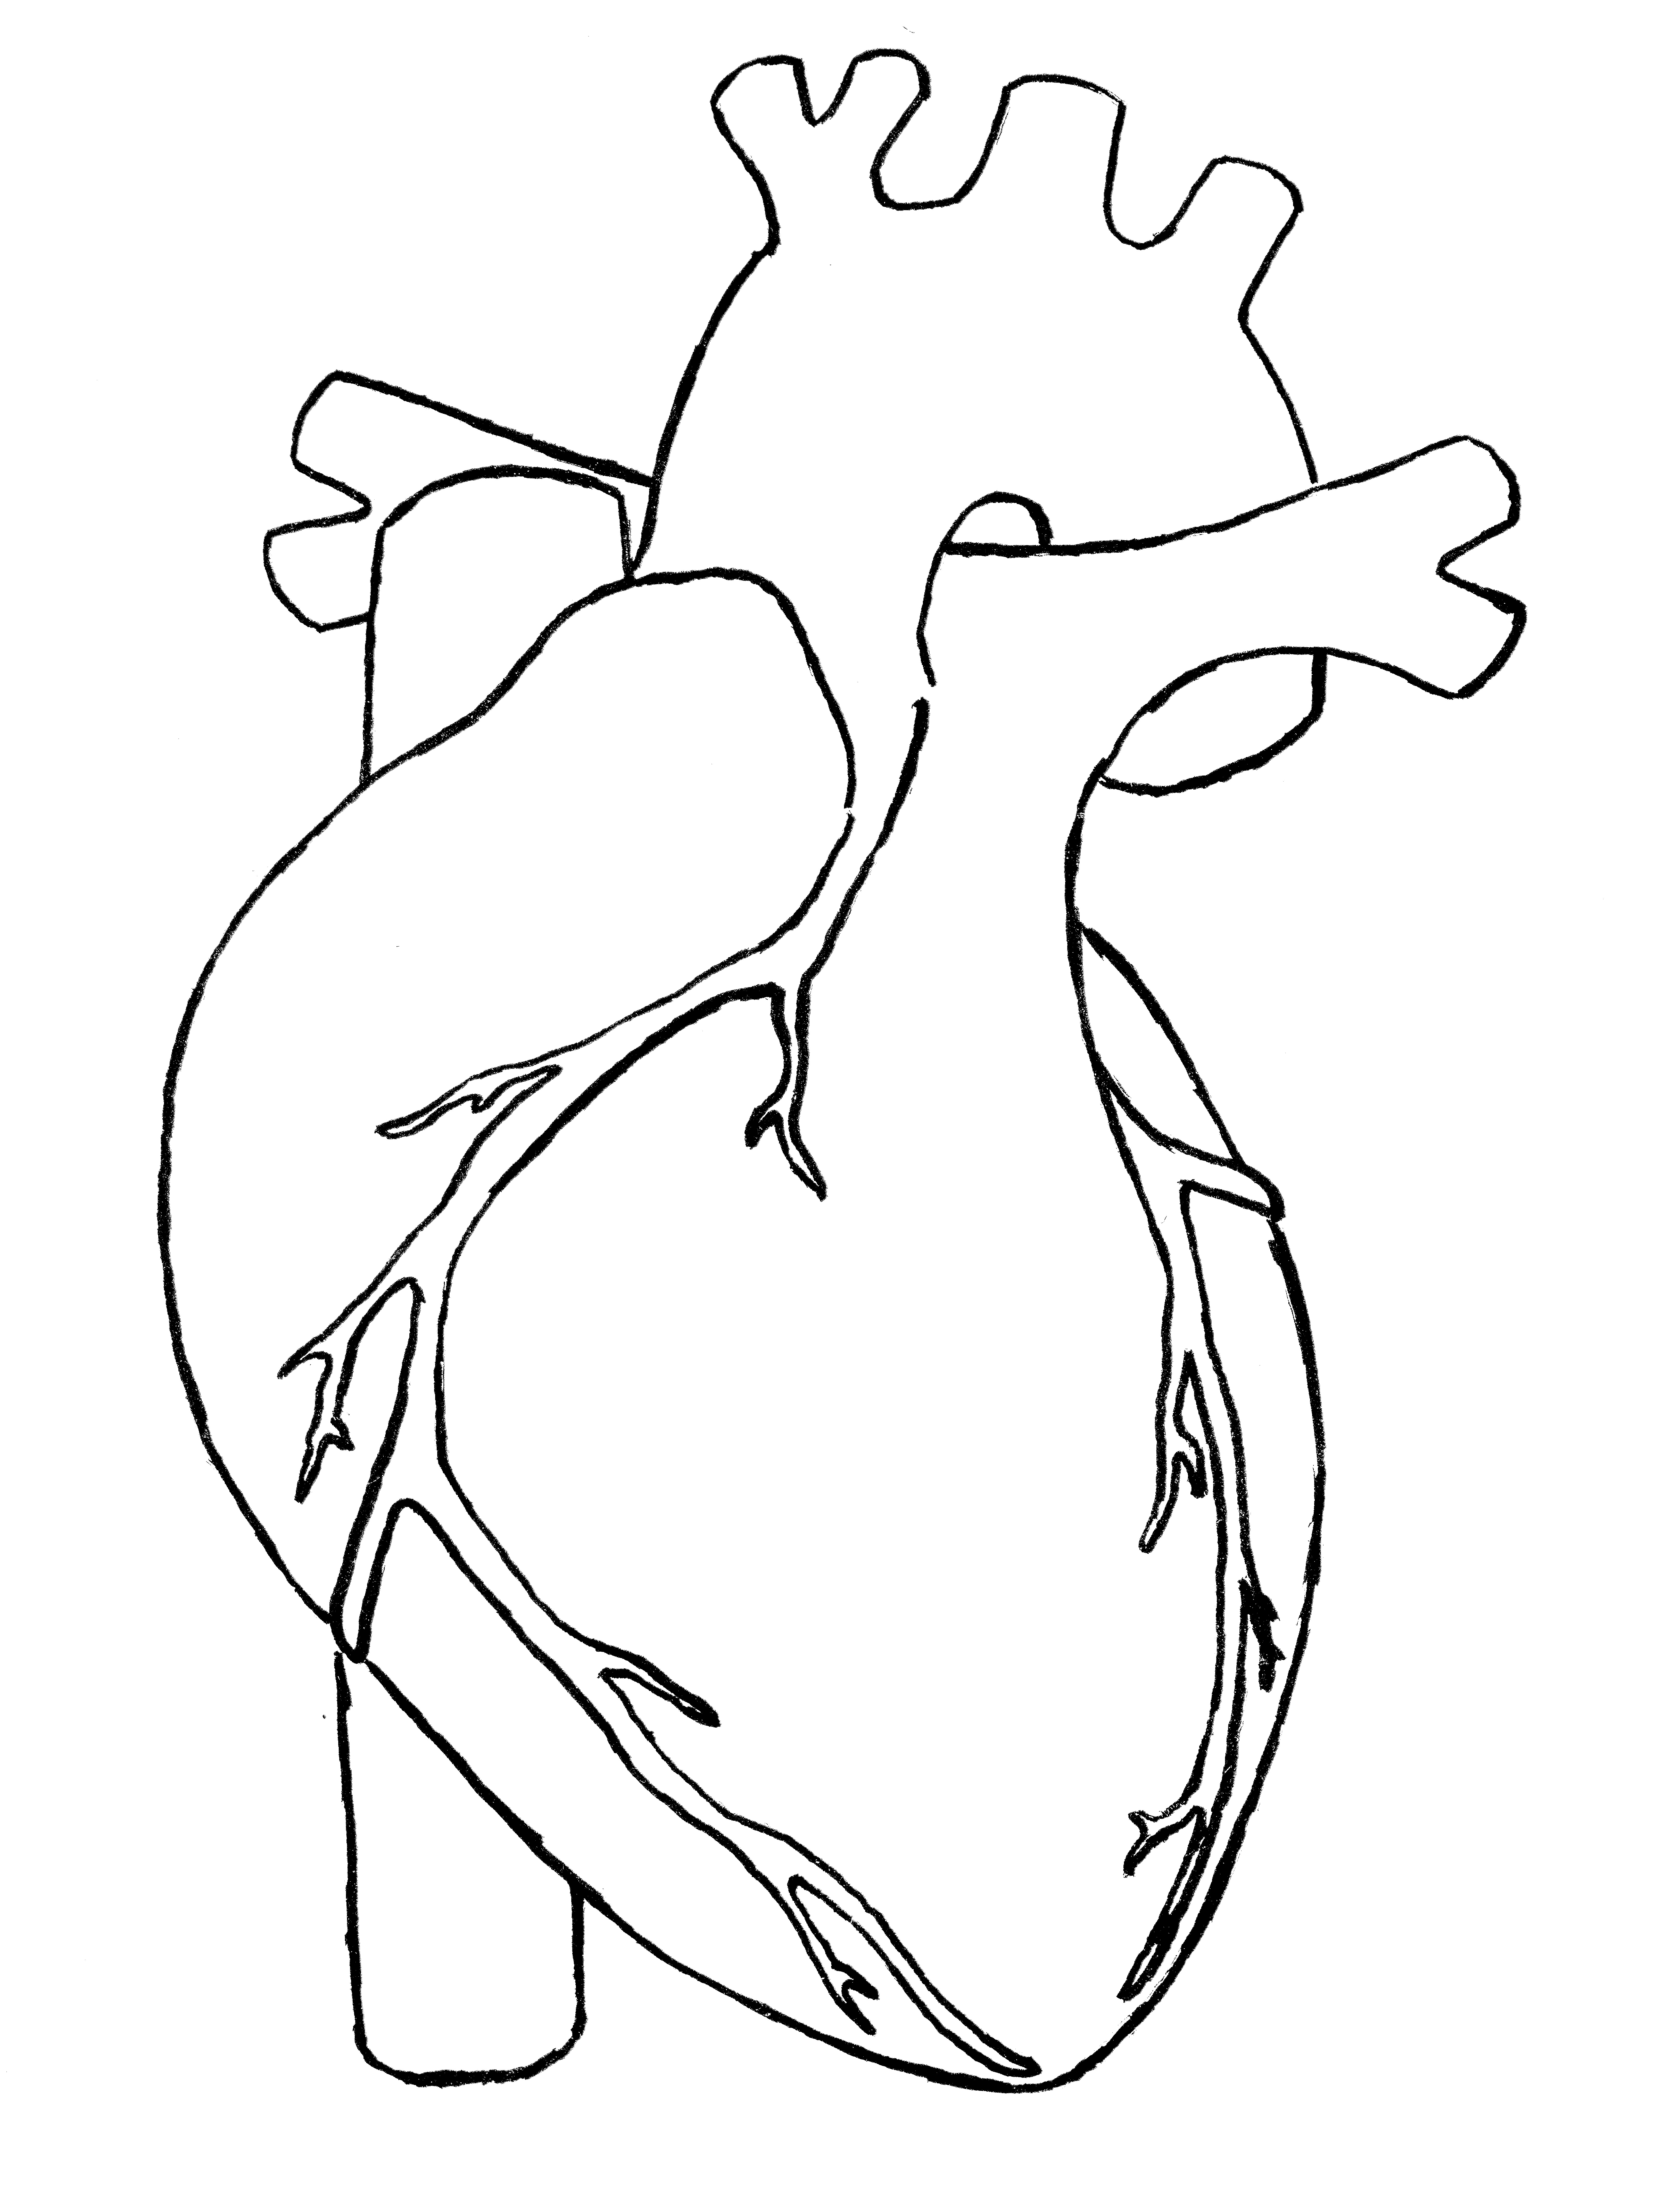 creating heart sketch